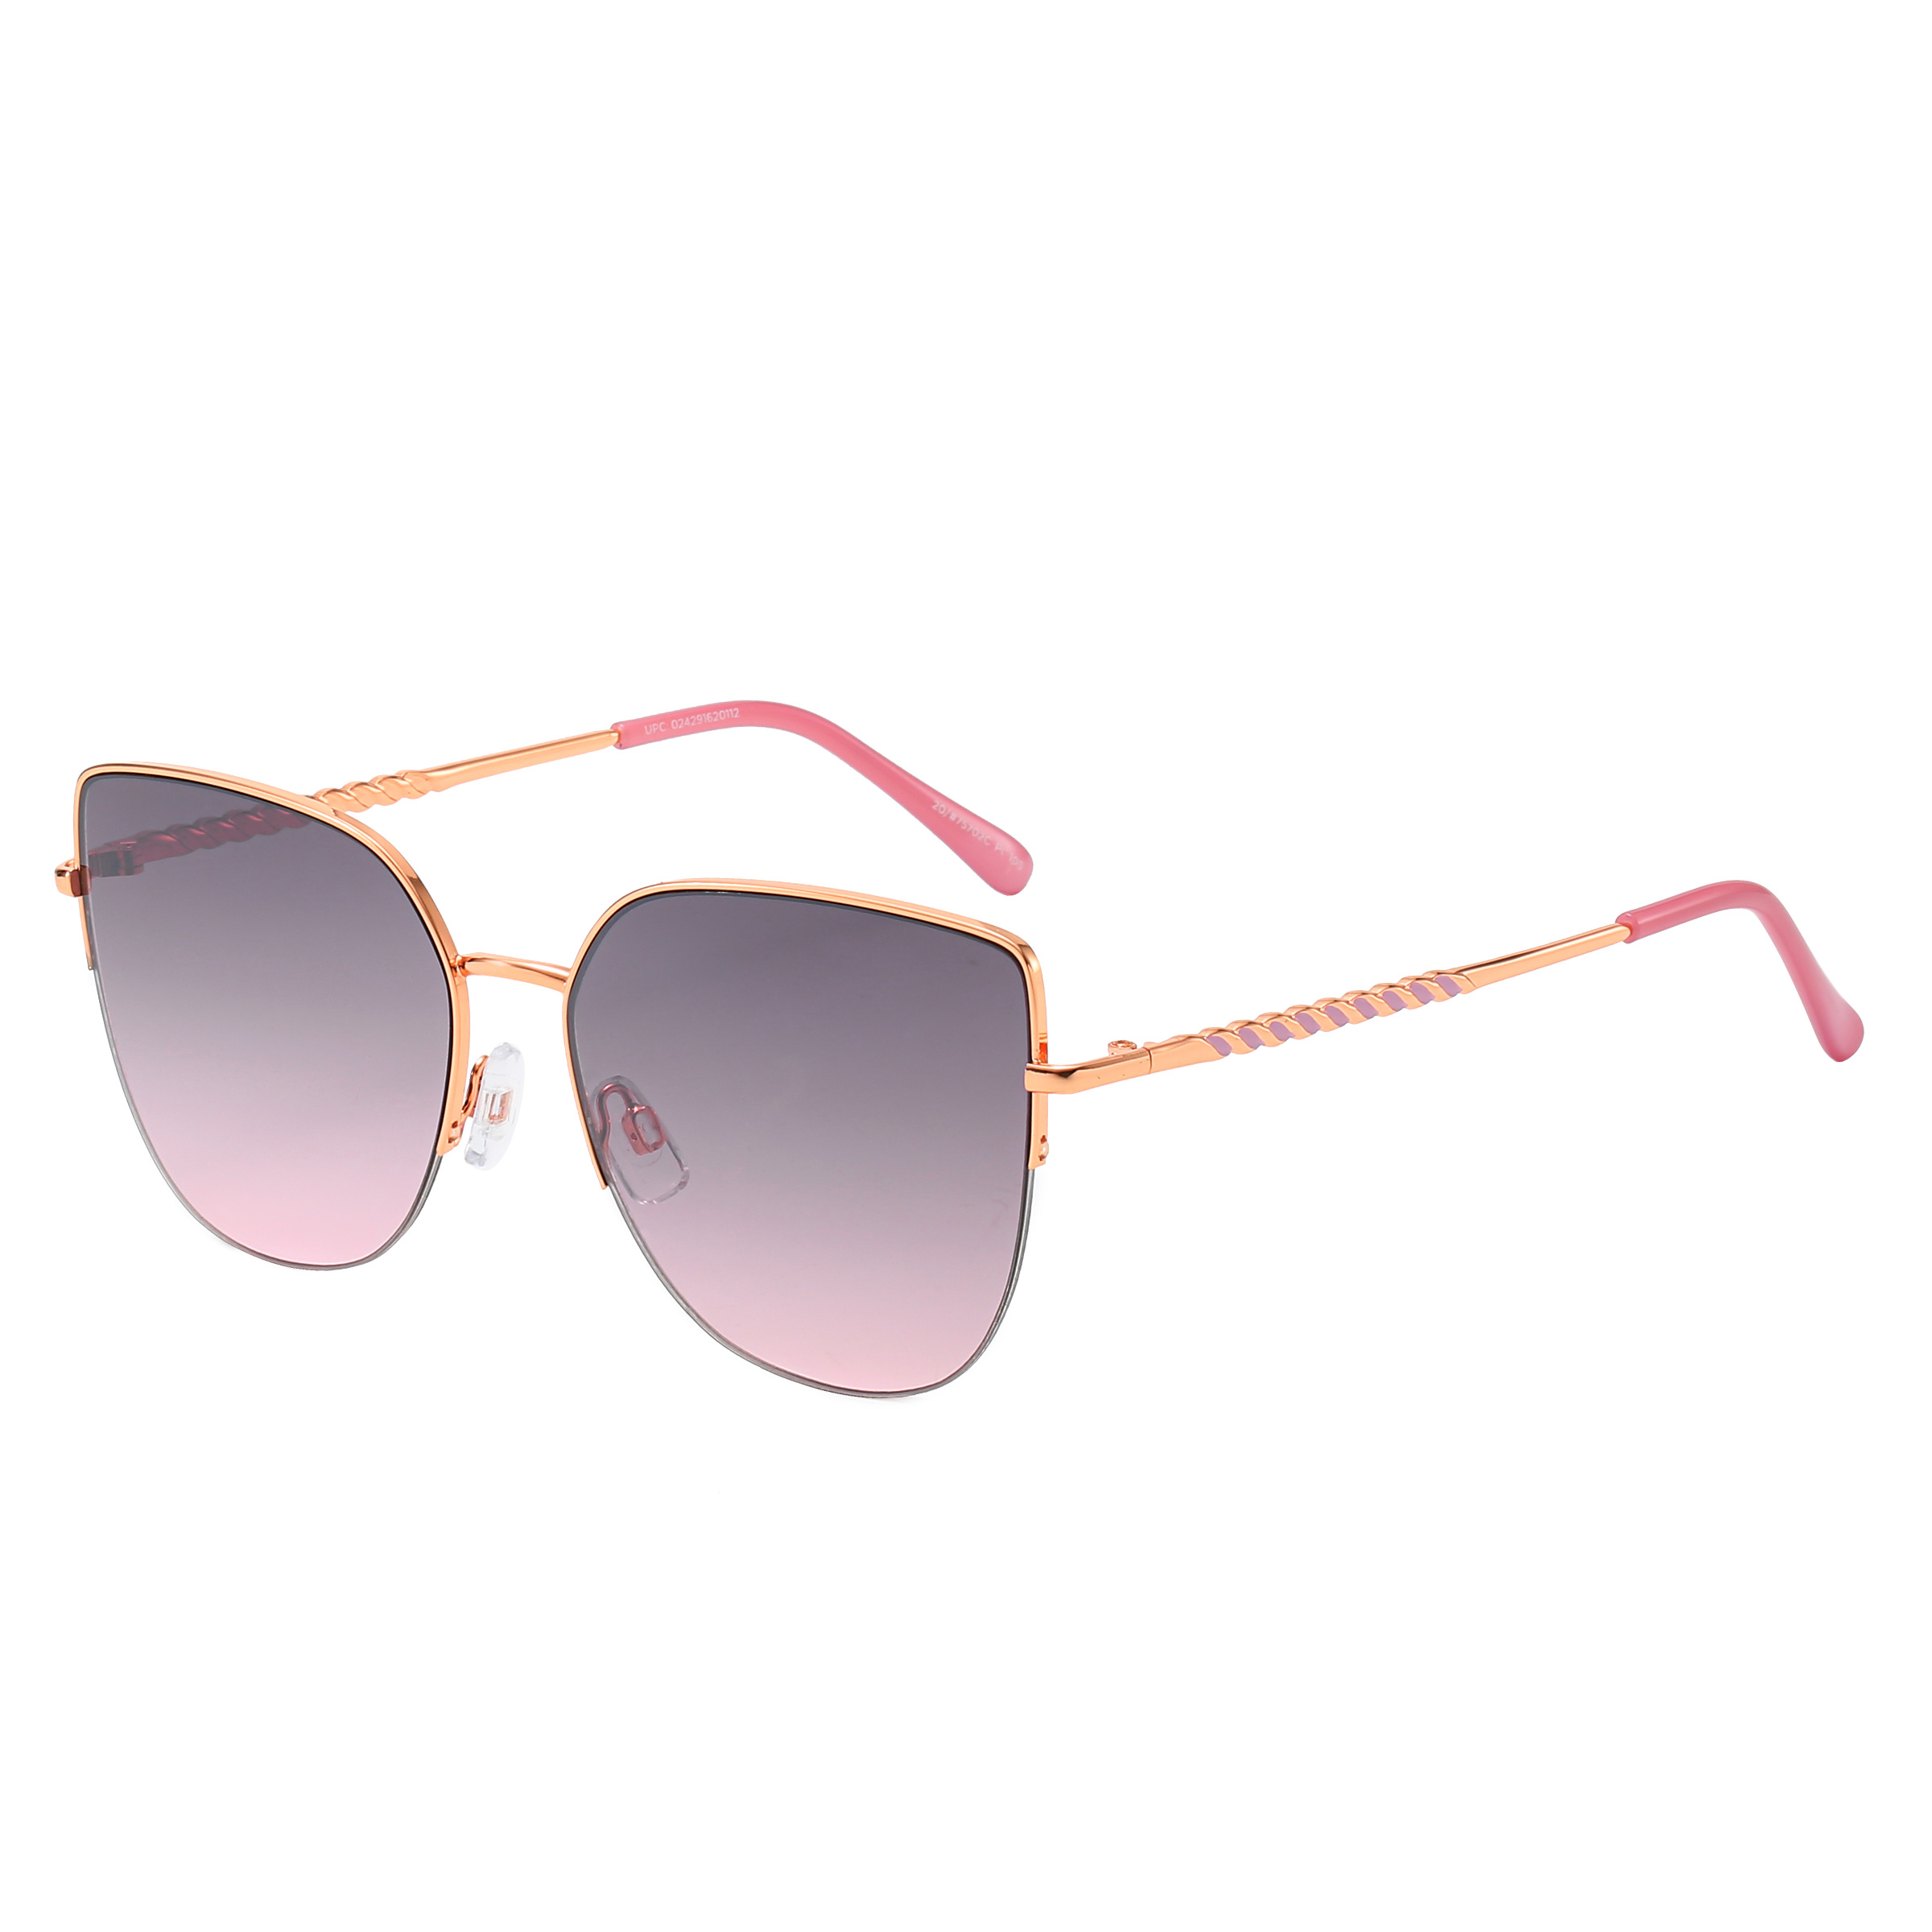 Piranha Eyewear Rebecca Oversize Cat Eye Sunglasses for Women with Purple Gradient Lens - image 1 of 3